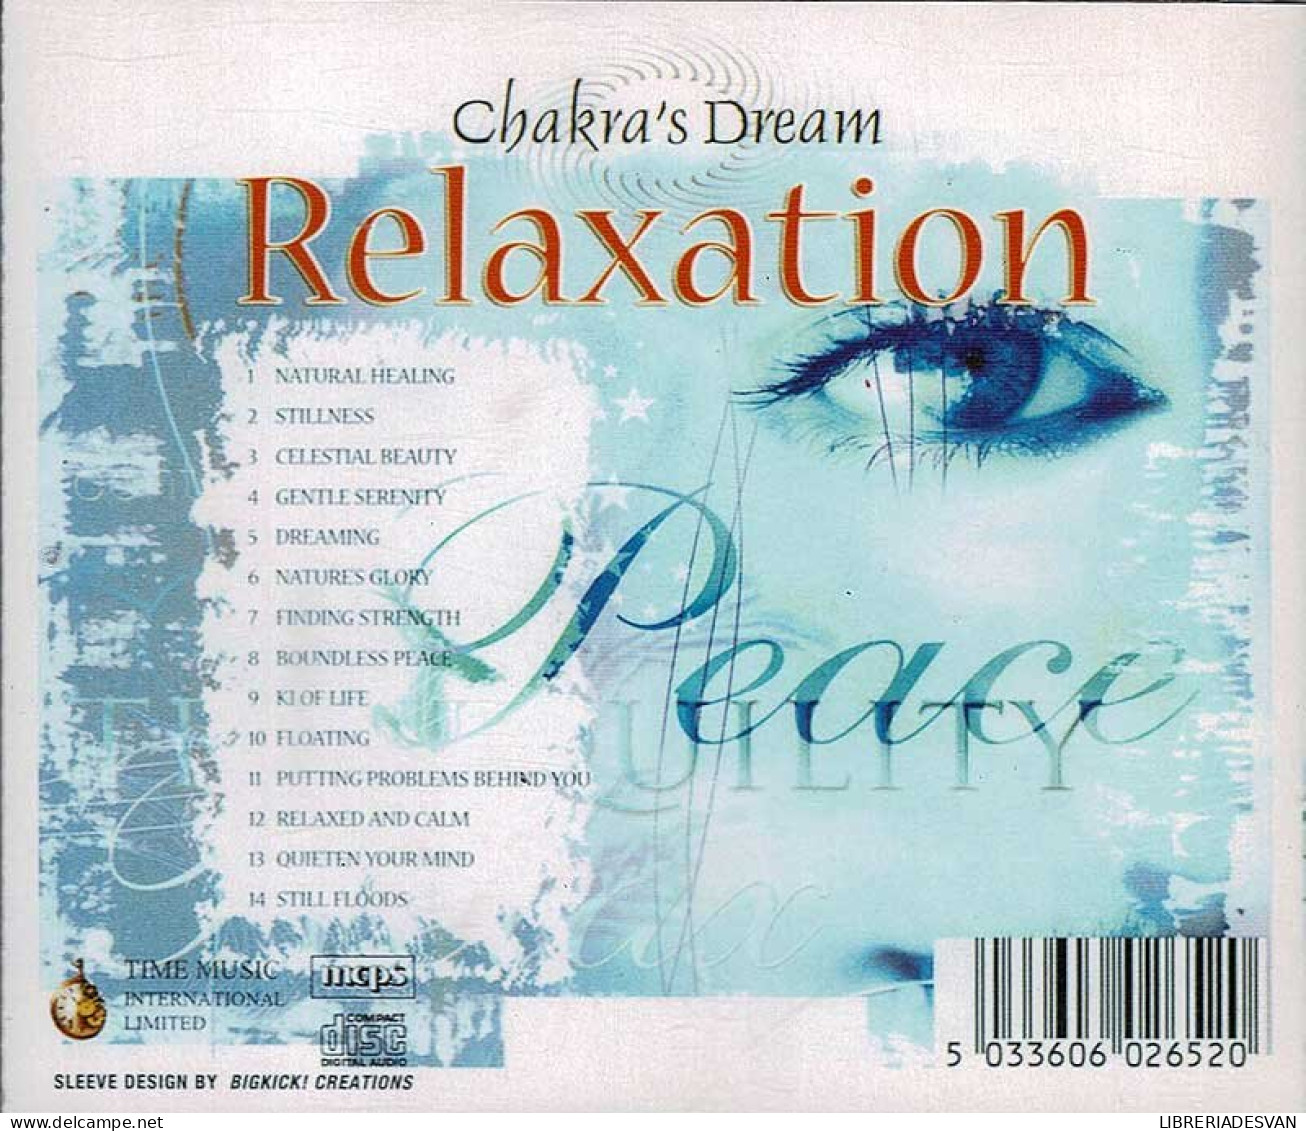 Chakra's Dream - Relaxation. CD - Nueva Era (New Age)